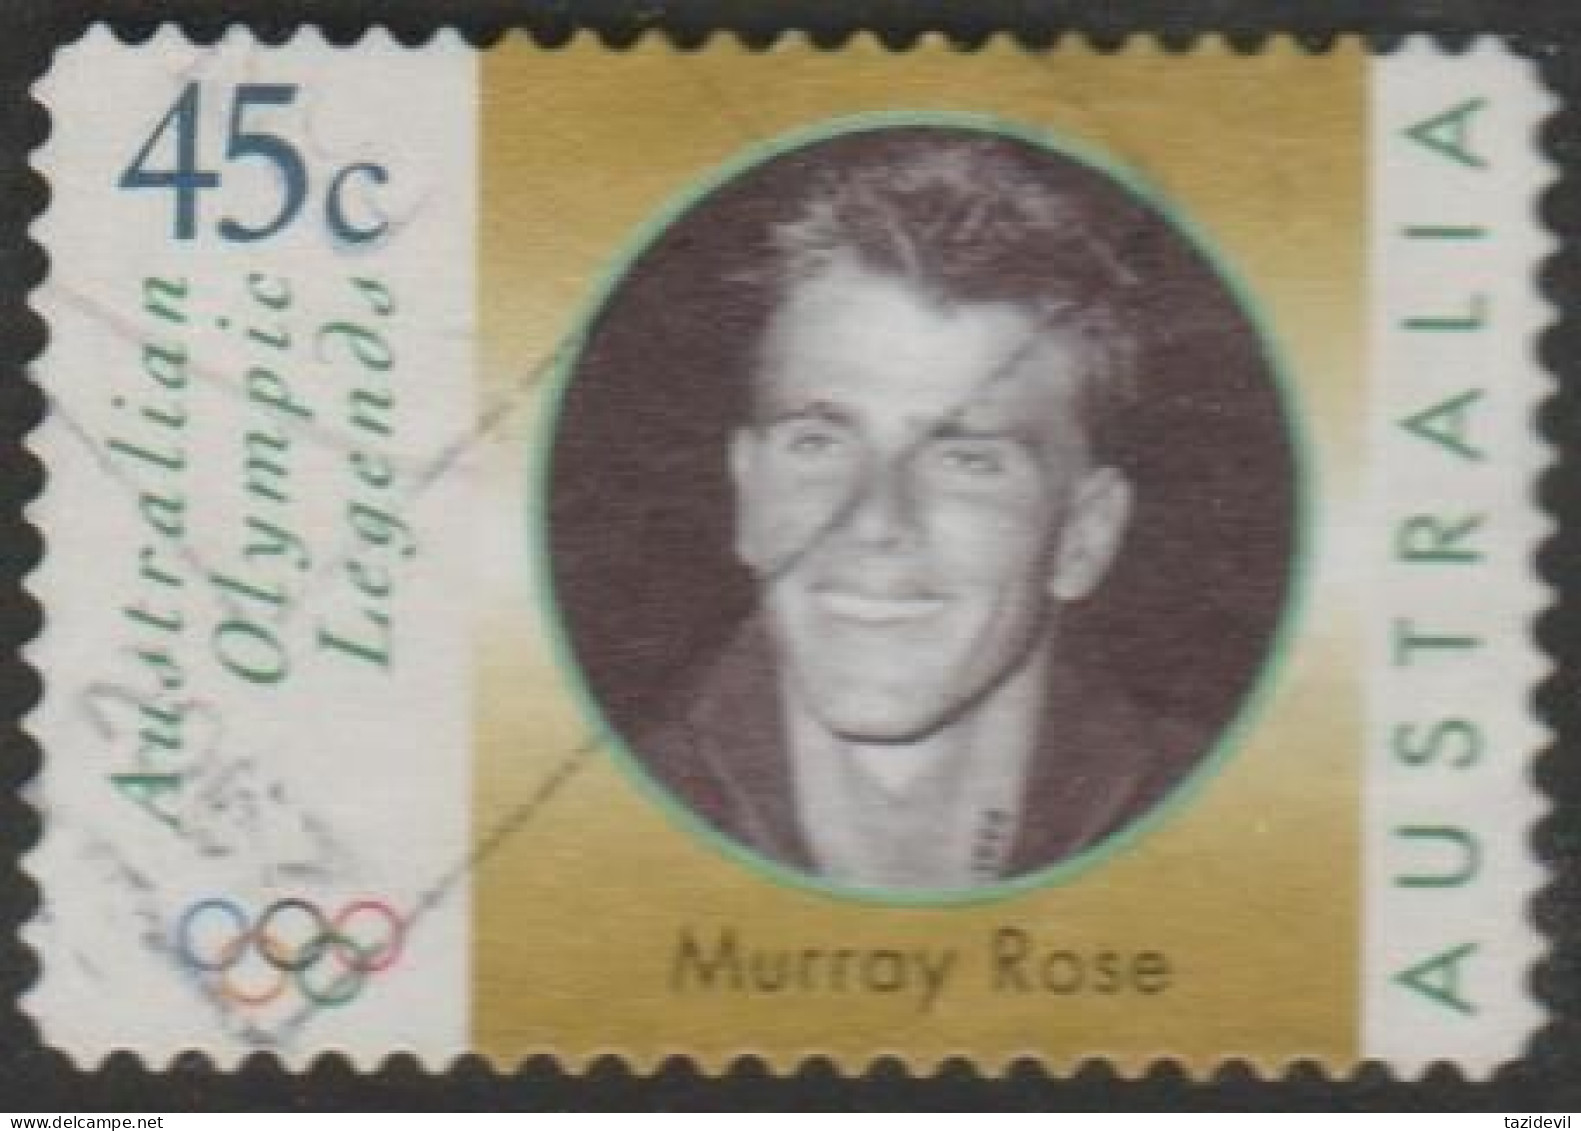 AUSTRALIA - DIE-CUT-USED 1998 45c Olympic Games Gold Medal Winners - Murray Rose - Face - Gebraucht